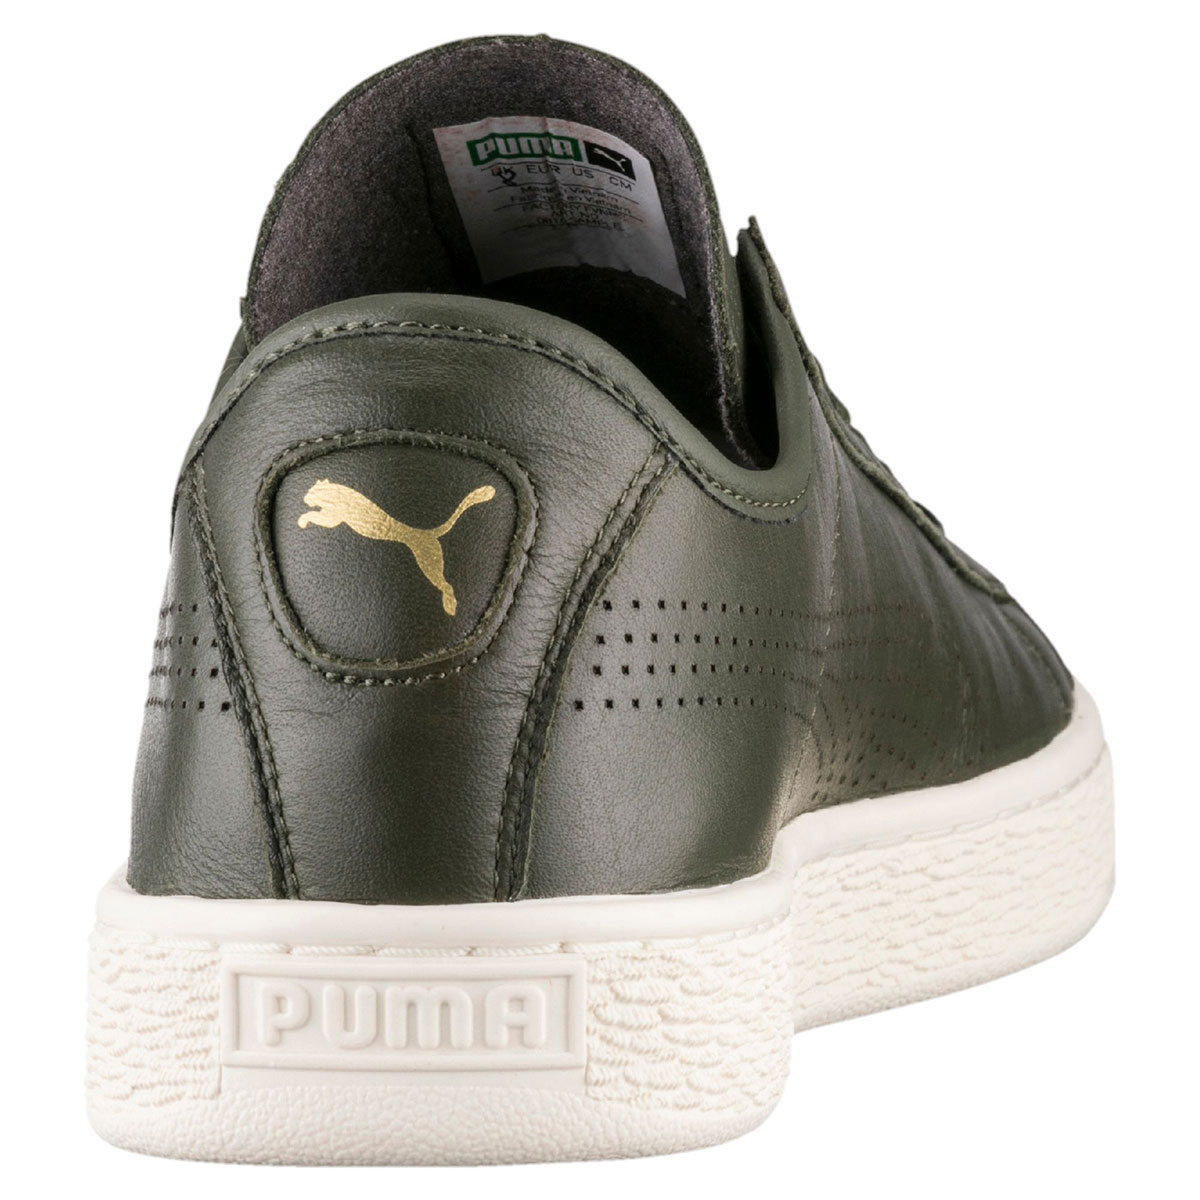 Puma Basket Classic Soft green  363824-03